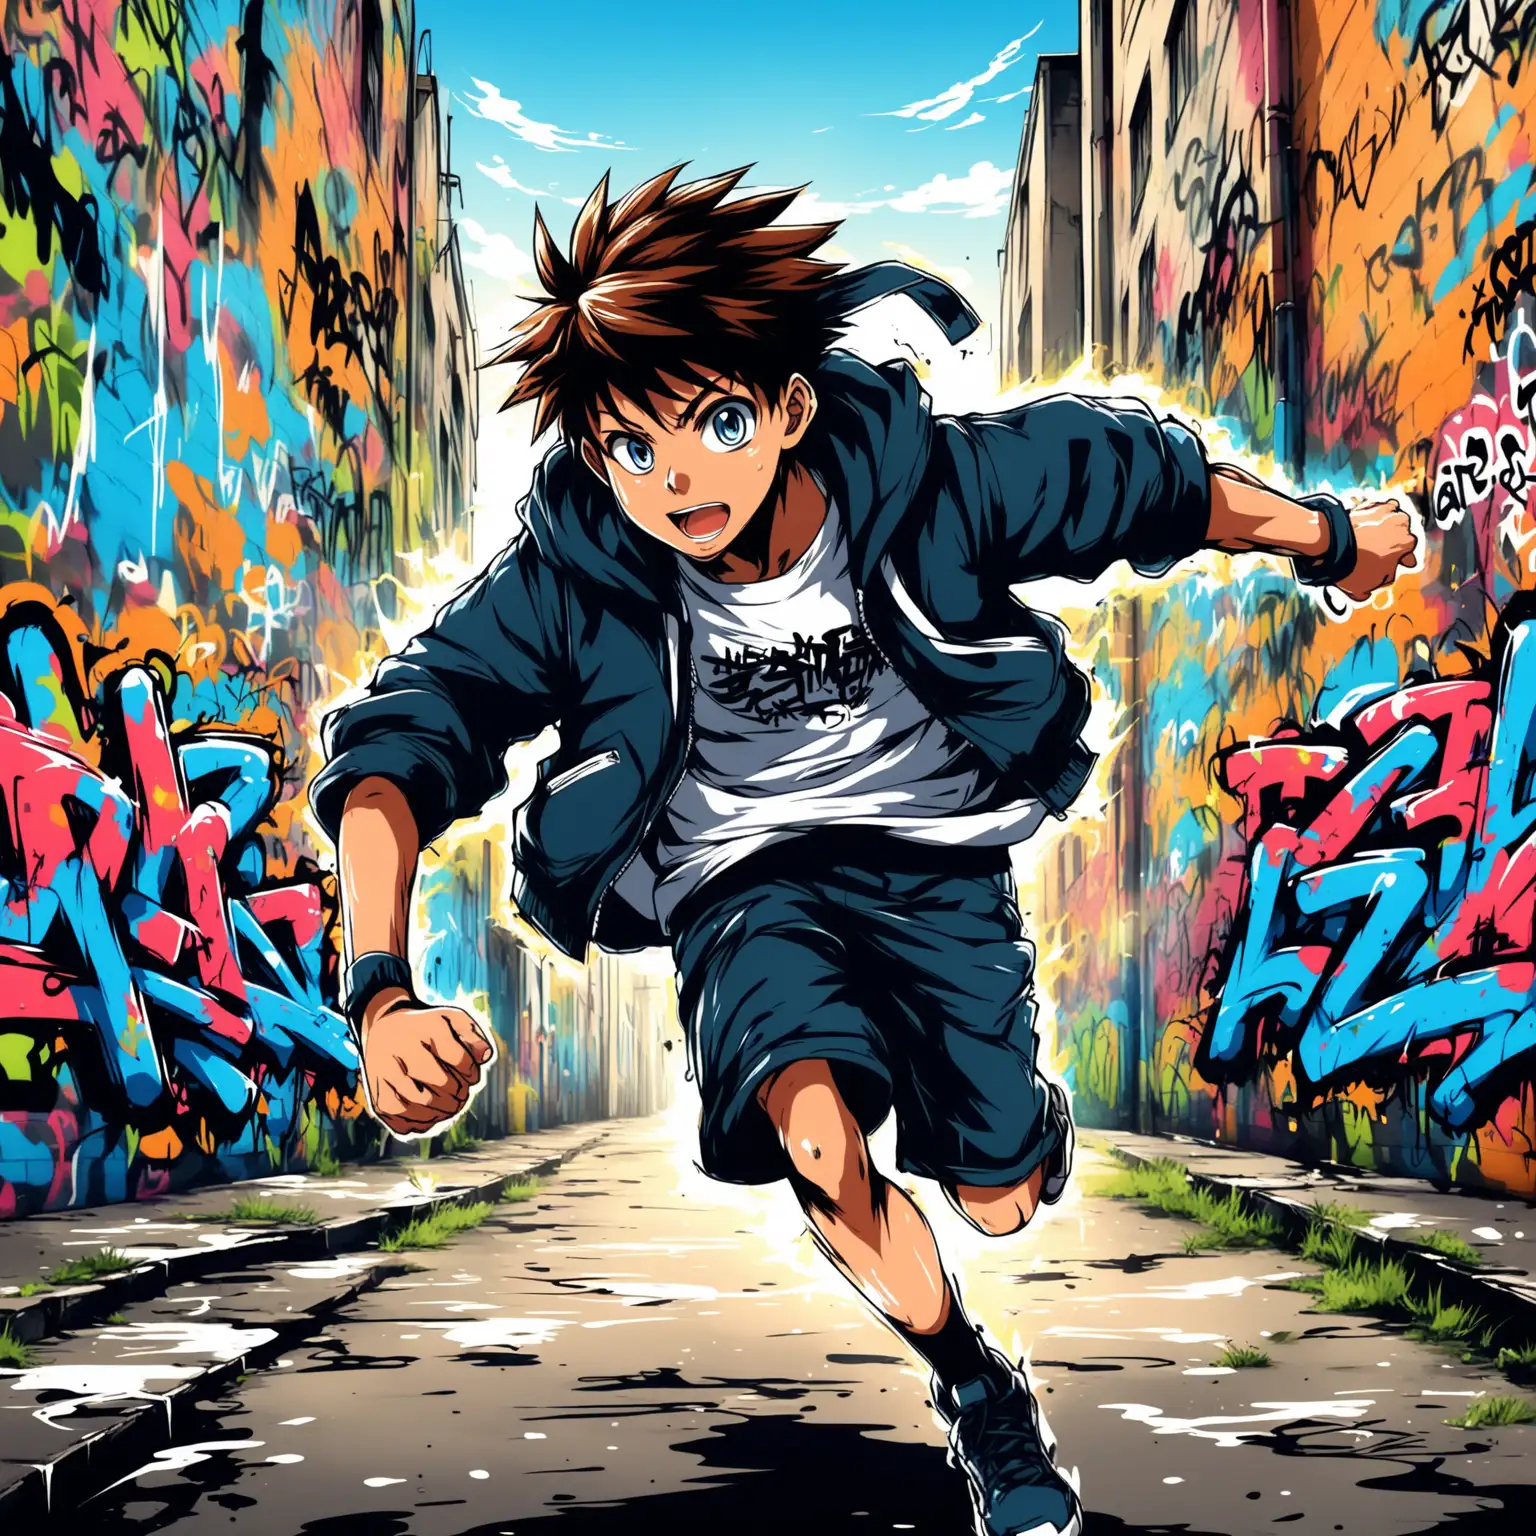 anime boy running in a graffiti style